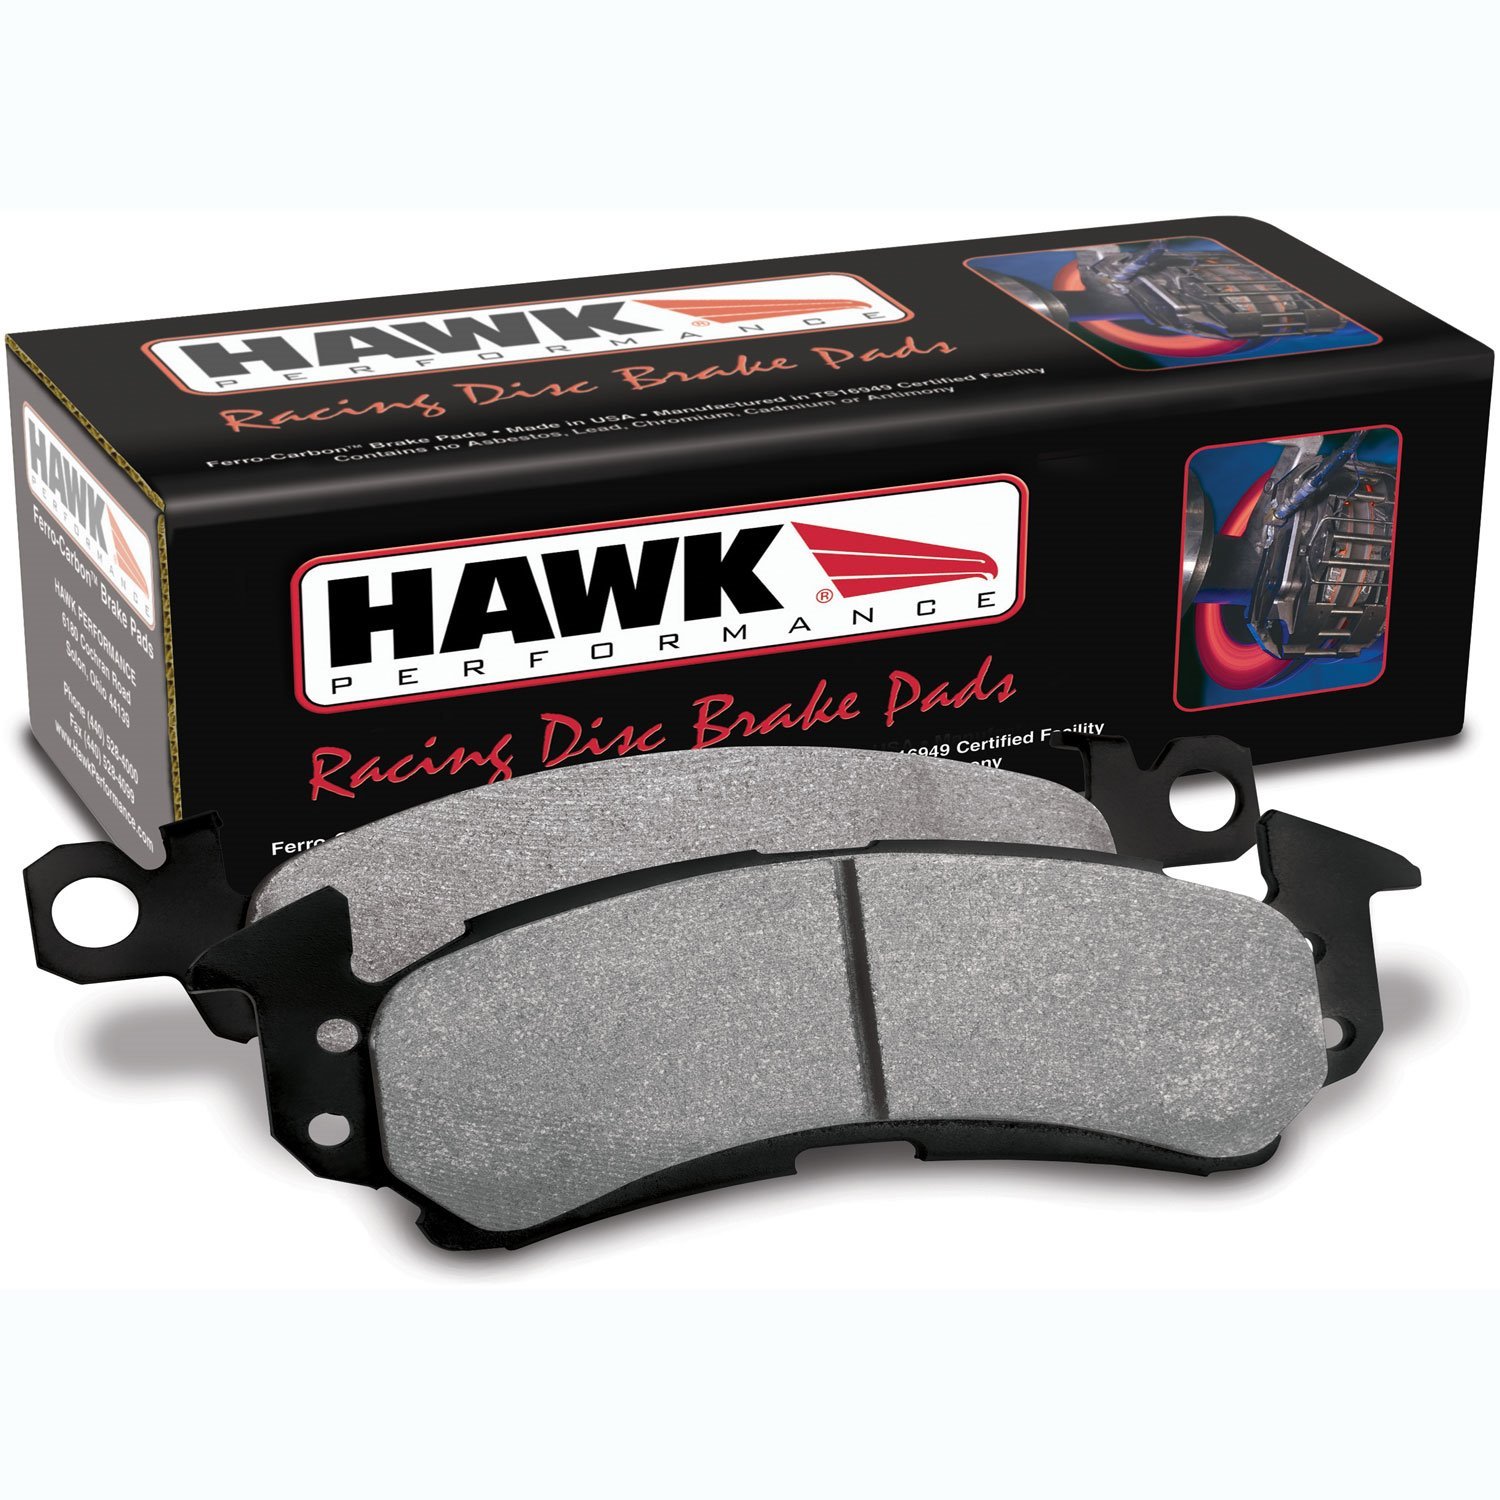 Disc Brake Pad HP Plus w/0.638 Thickness